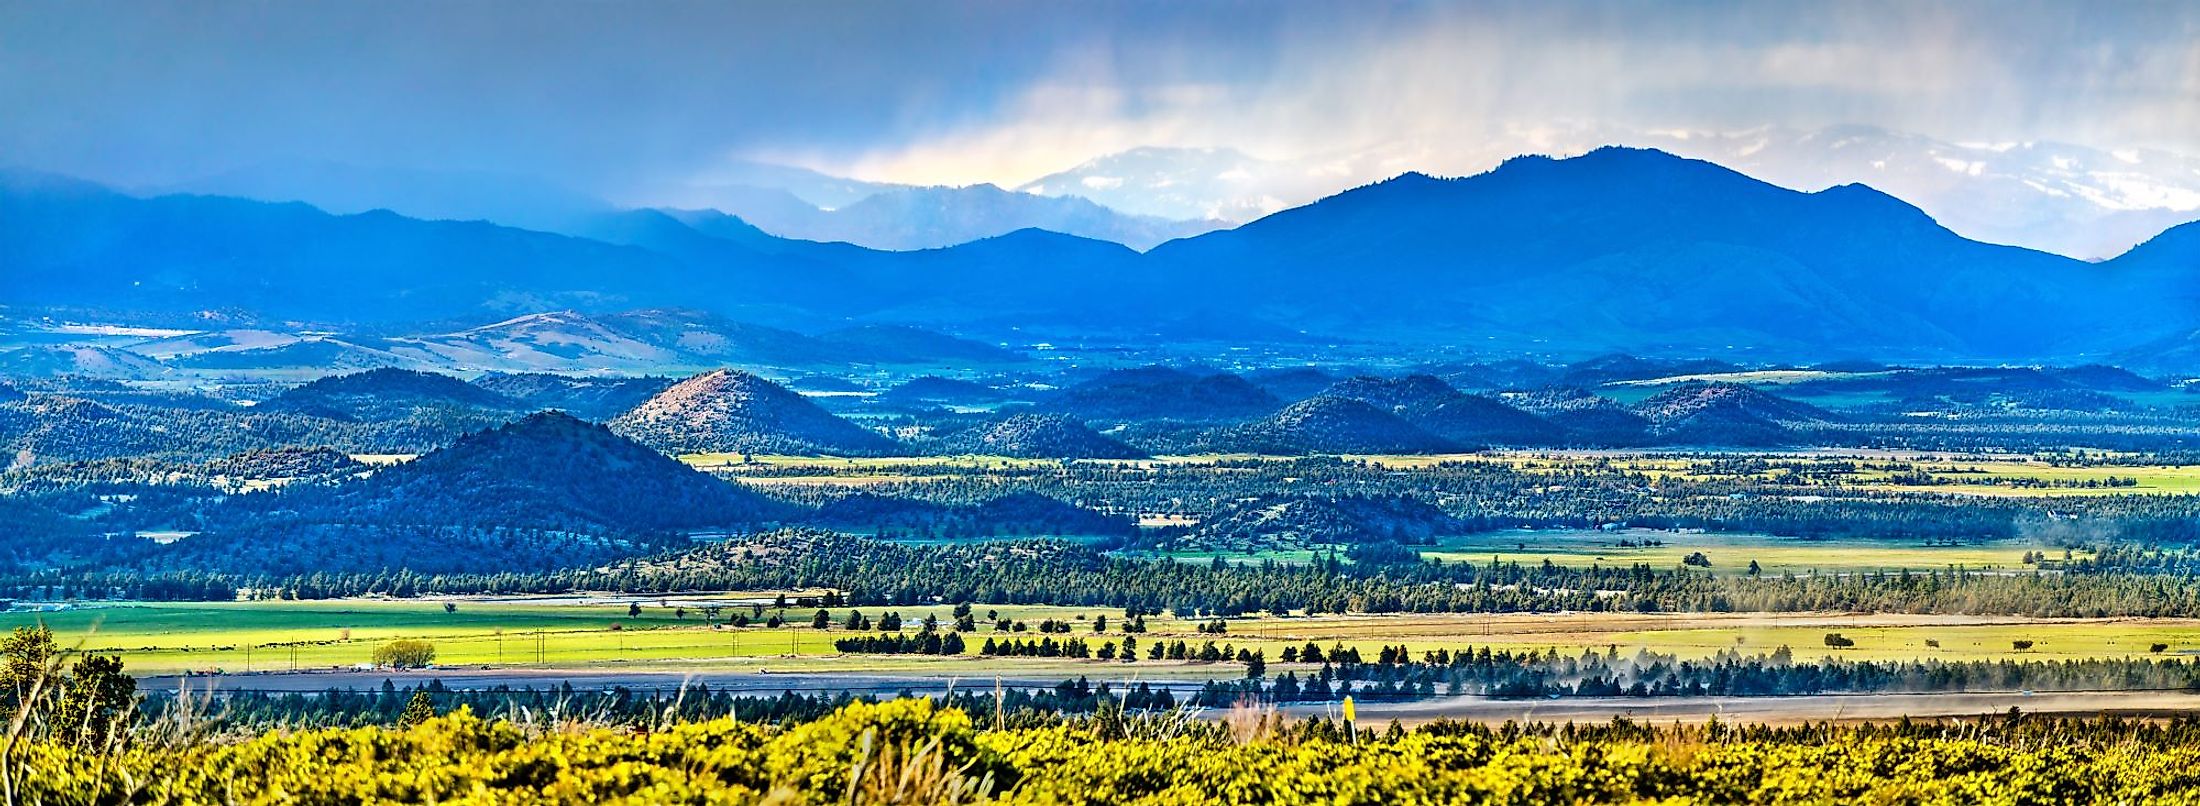 Panorama of Klamath Mountains in northwestern California